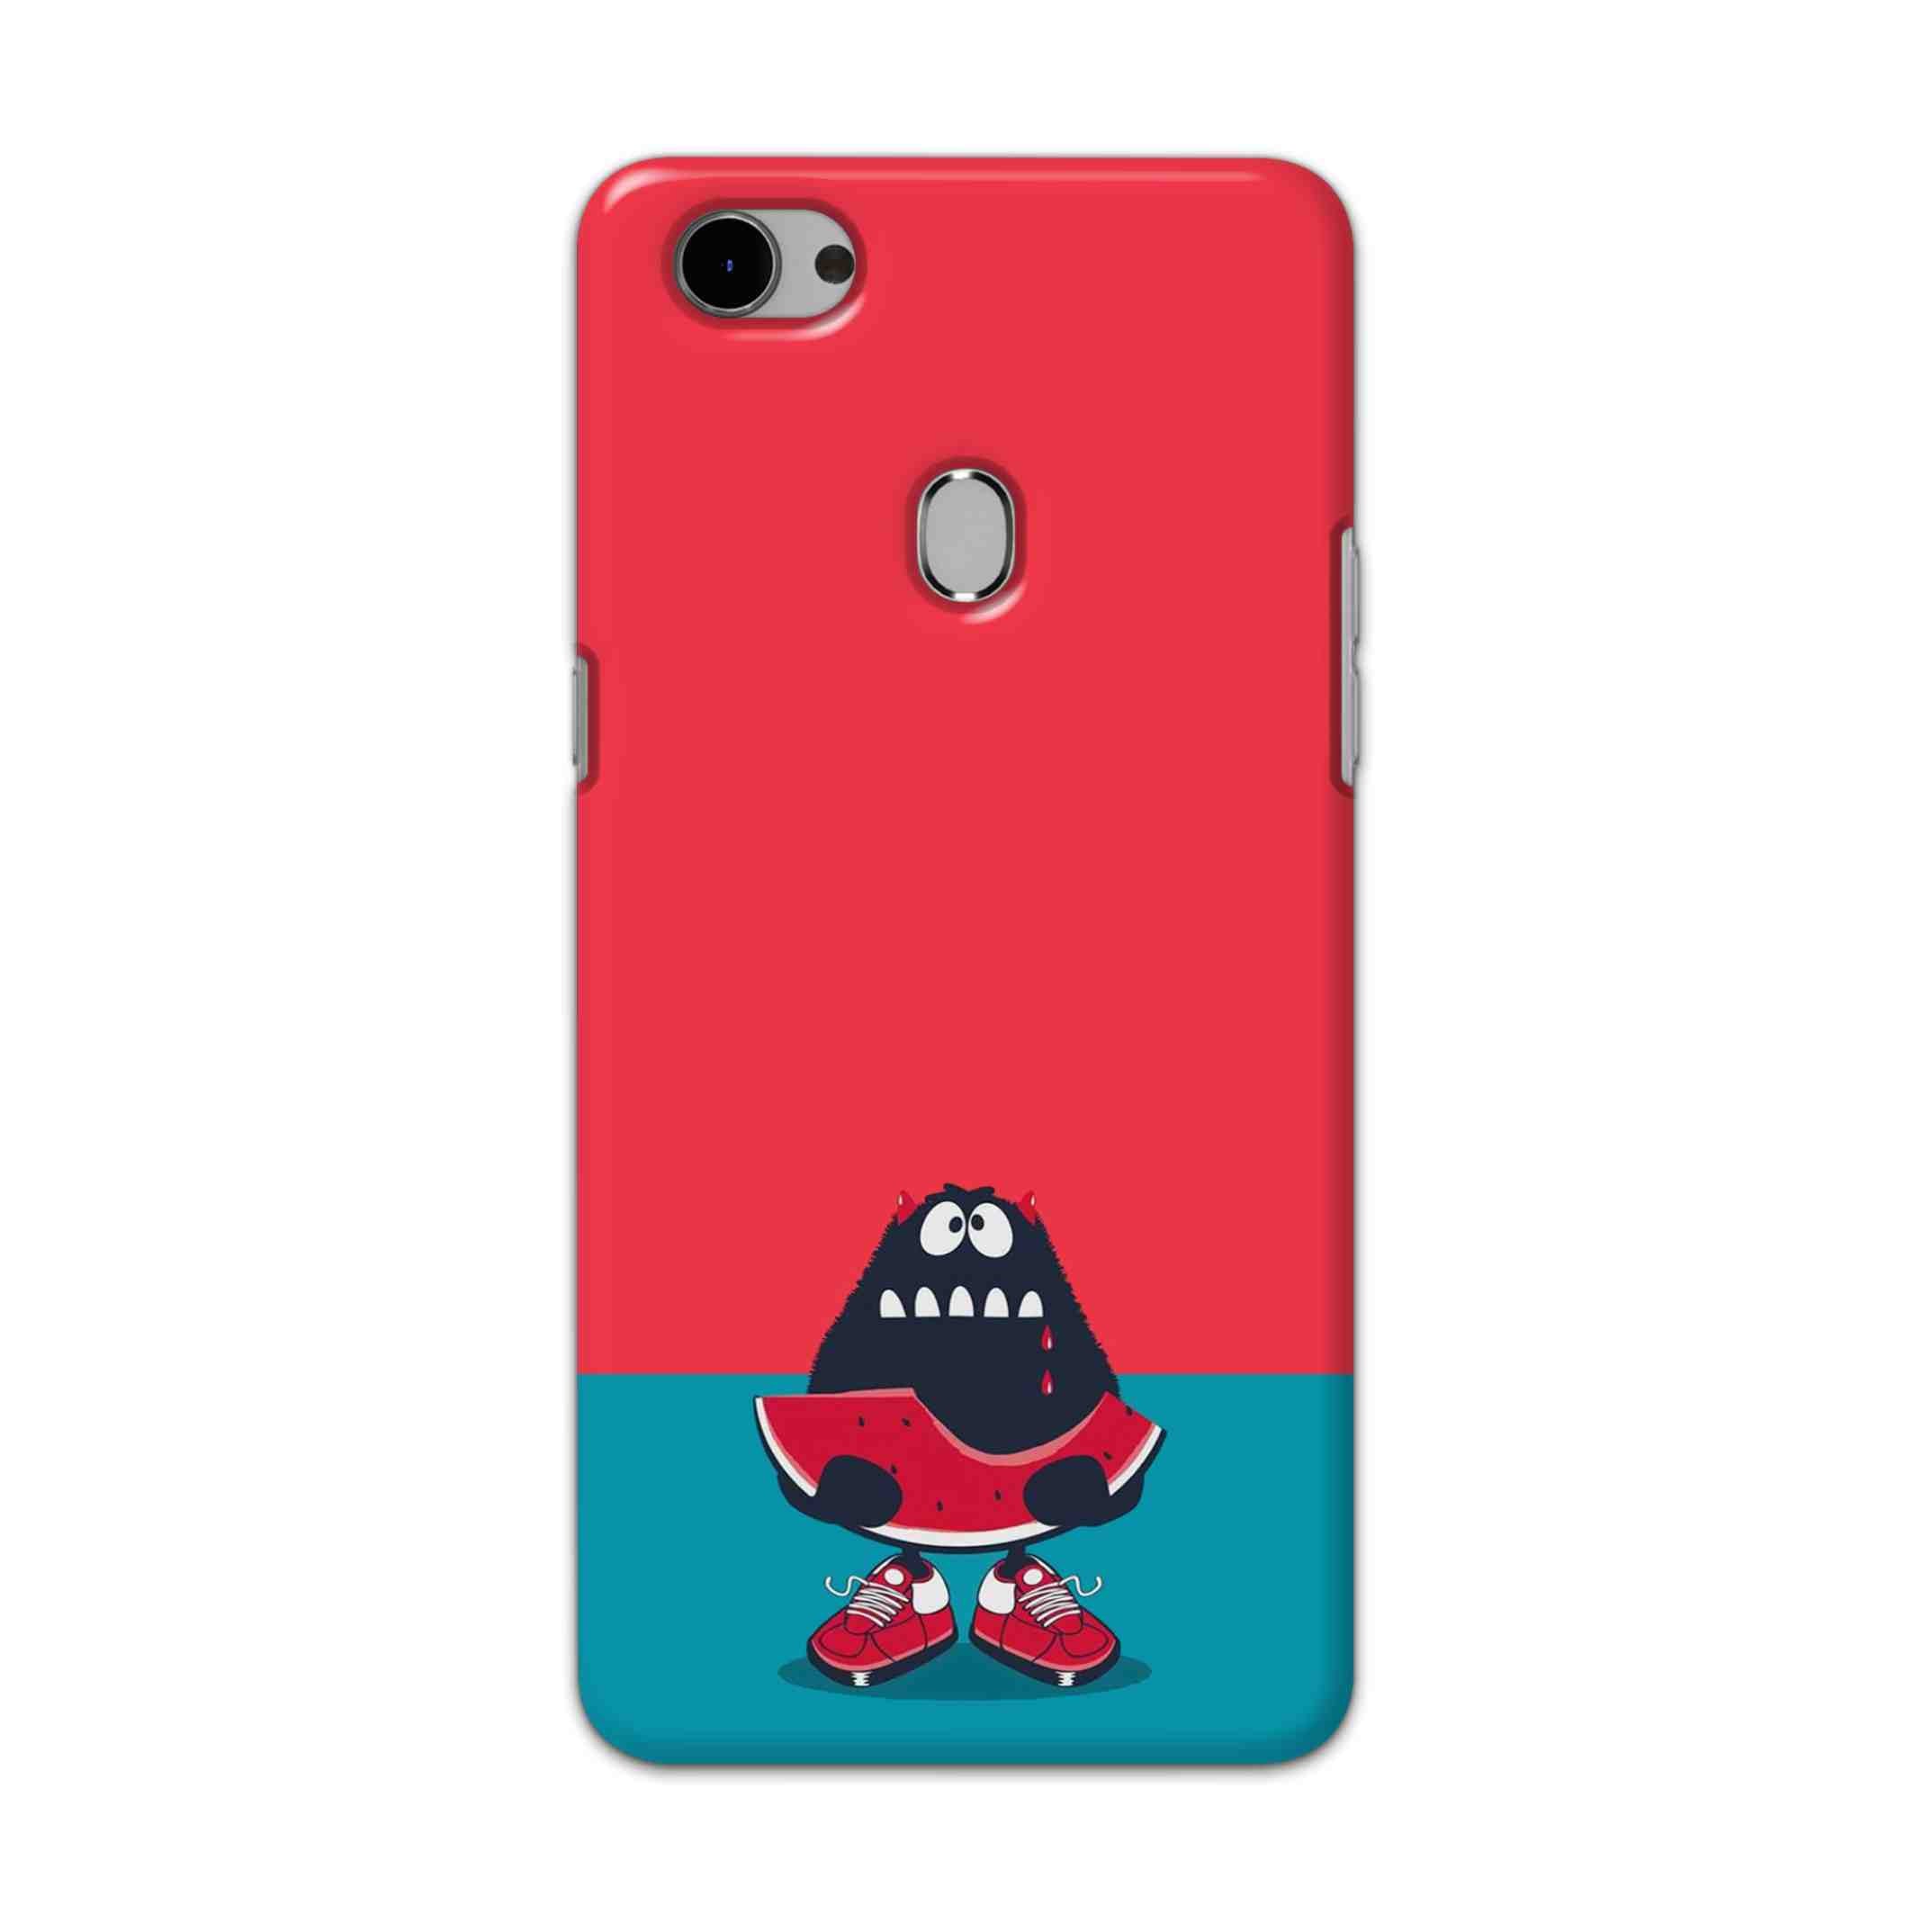 Buy Watermelon Hard Back Mobile Phone Case Cover For Oppo F7 Online